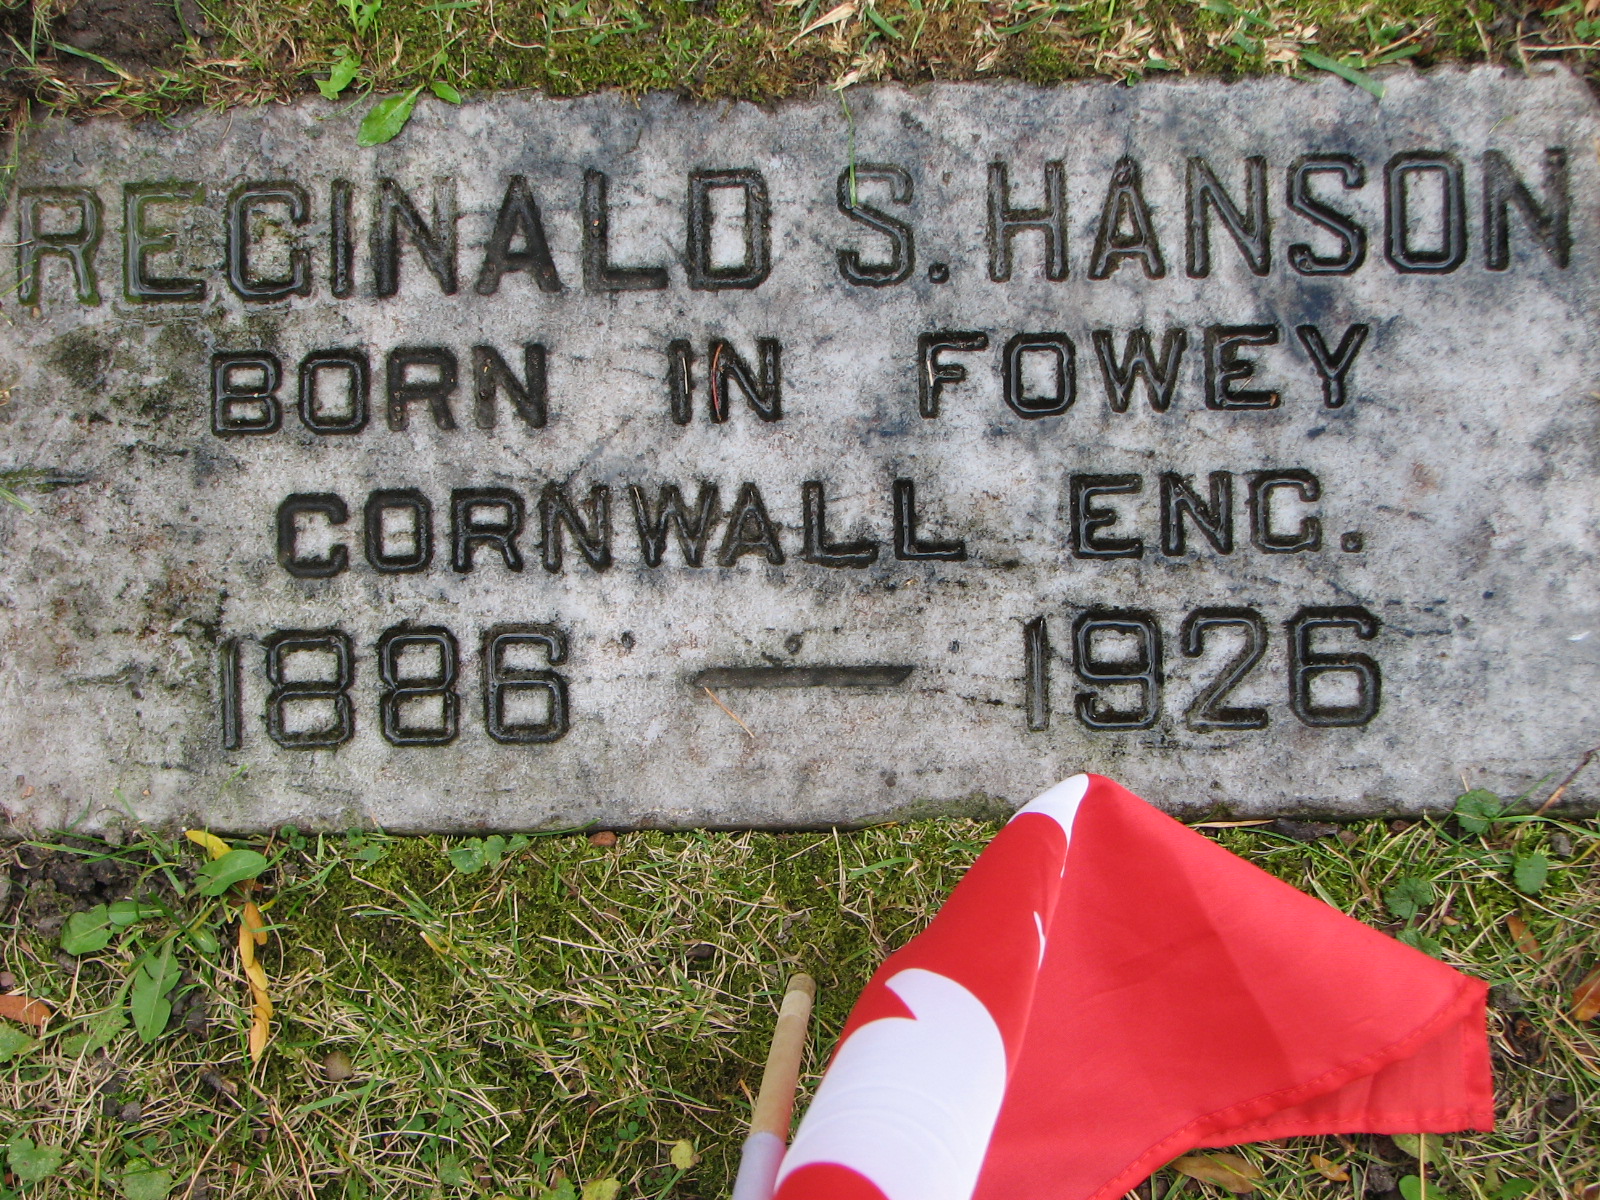 Reginal S. Hanson 1886-1926_ SMACW Cemetery